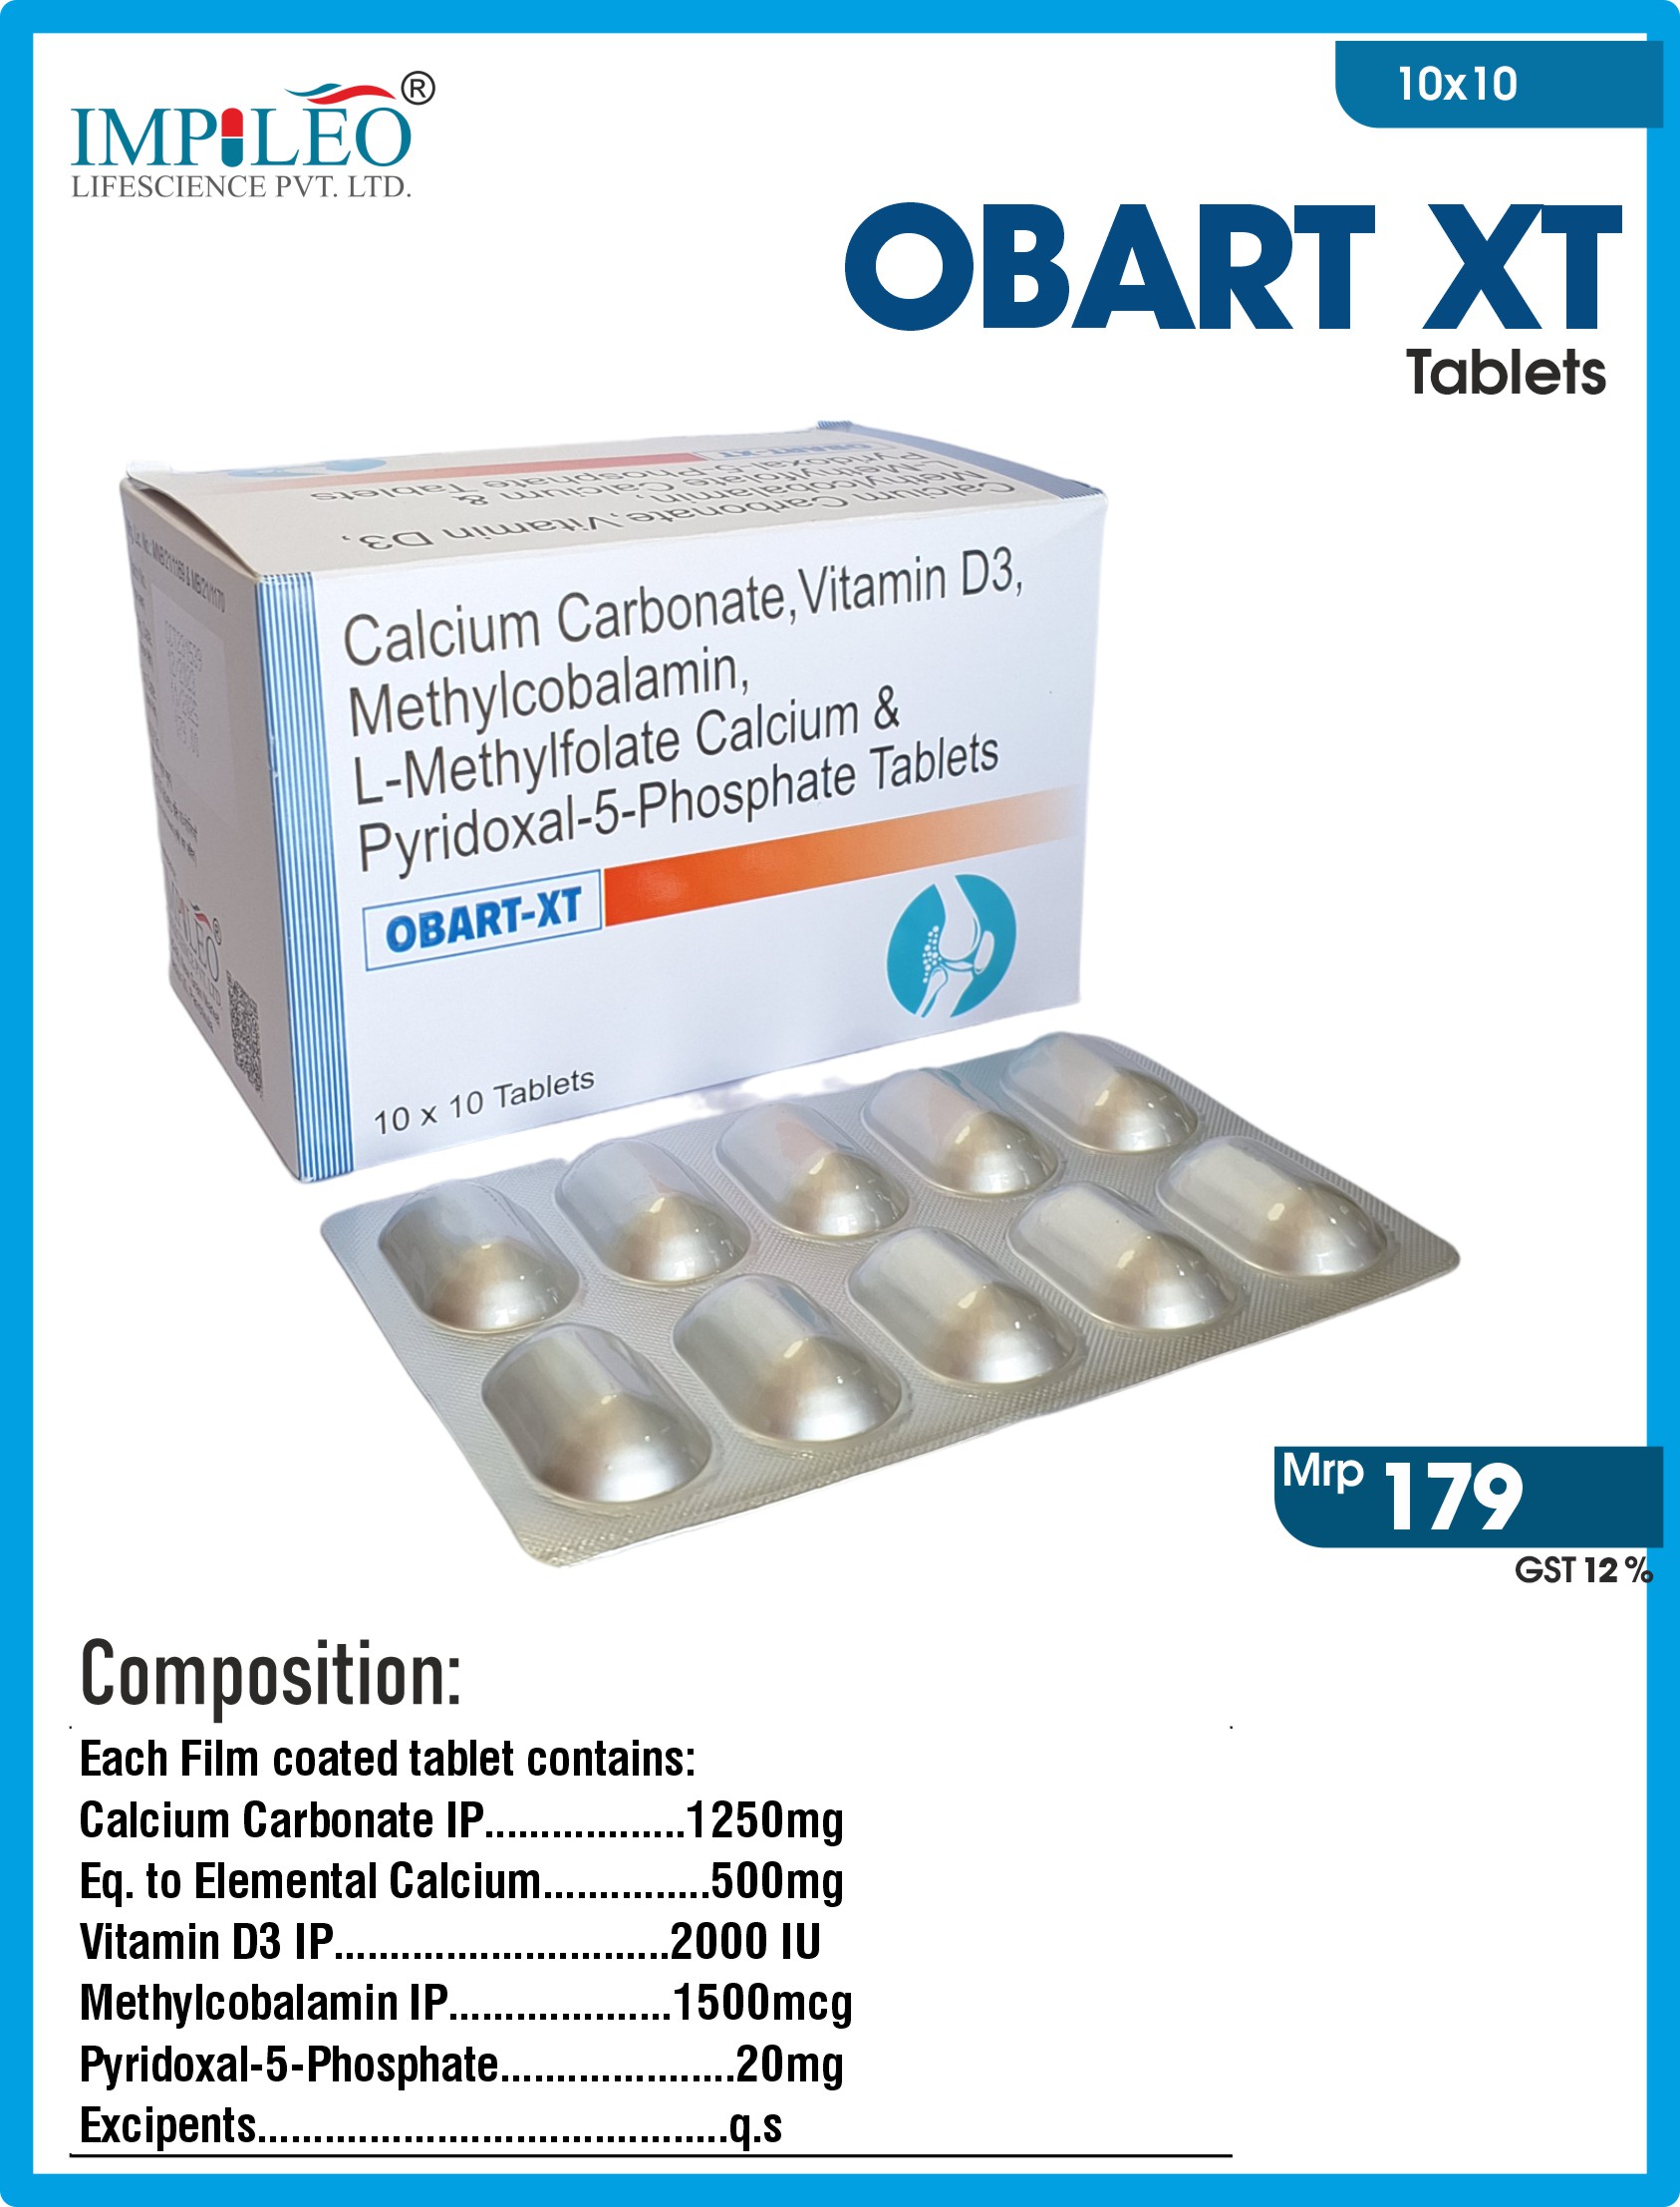 Leading PCD Pharma Franchise Provides OBART XT Tablets 